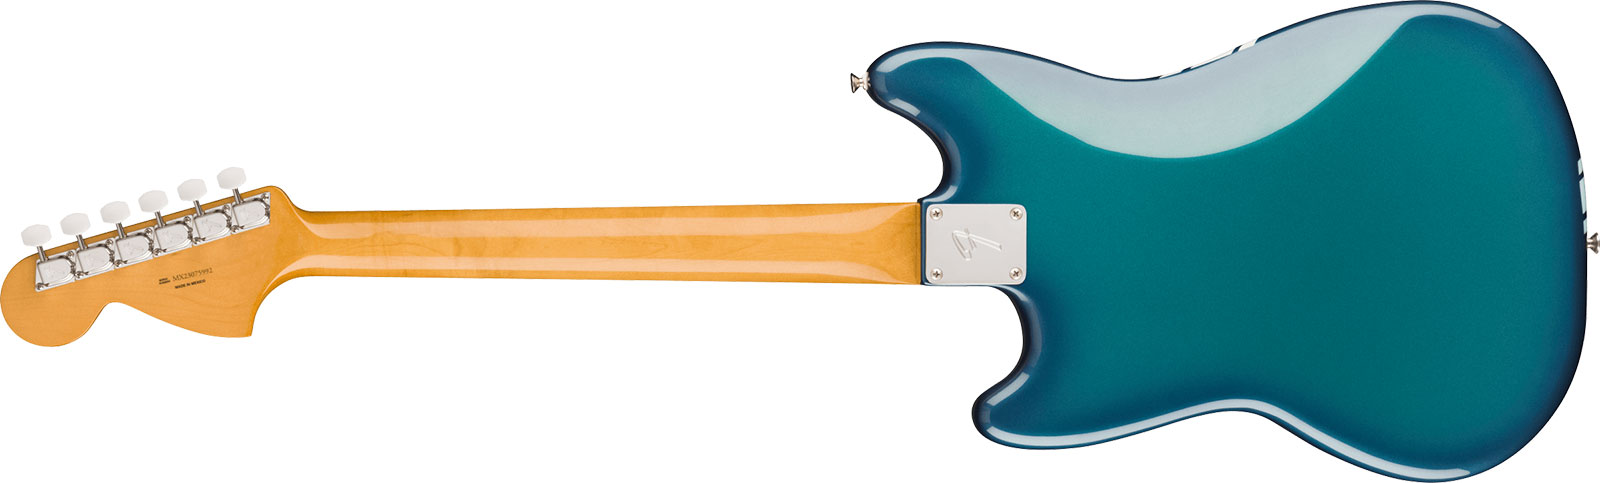 Fender Mustang 70s Competition Vintera 2 Mex 2s Trem Rw - Competition Blue - Retro-rock elektrische gitaar - Variation 1